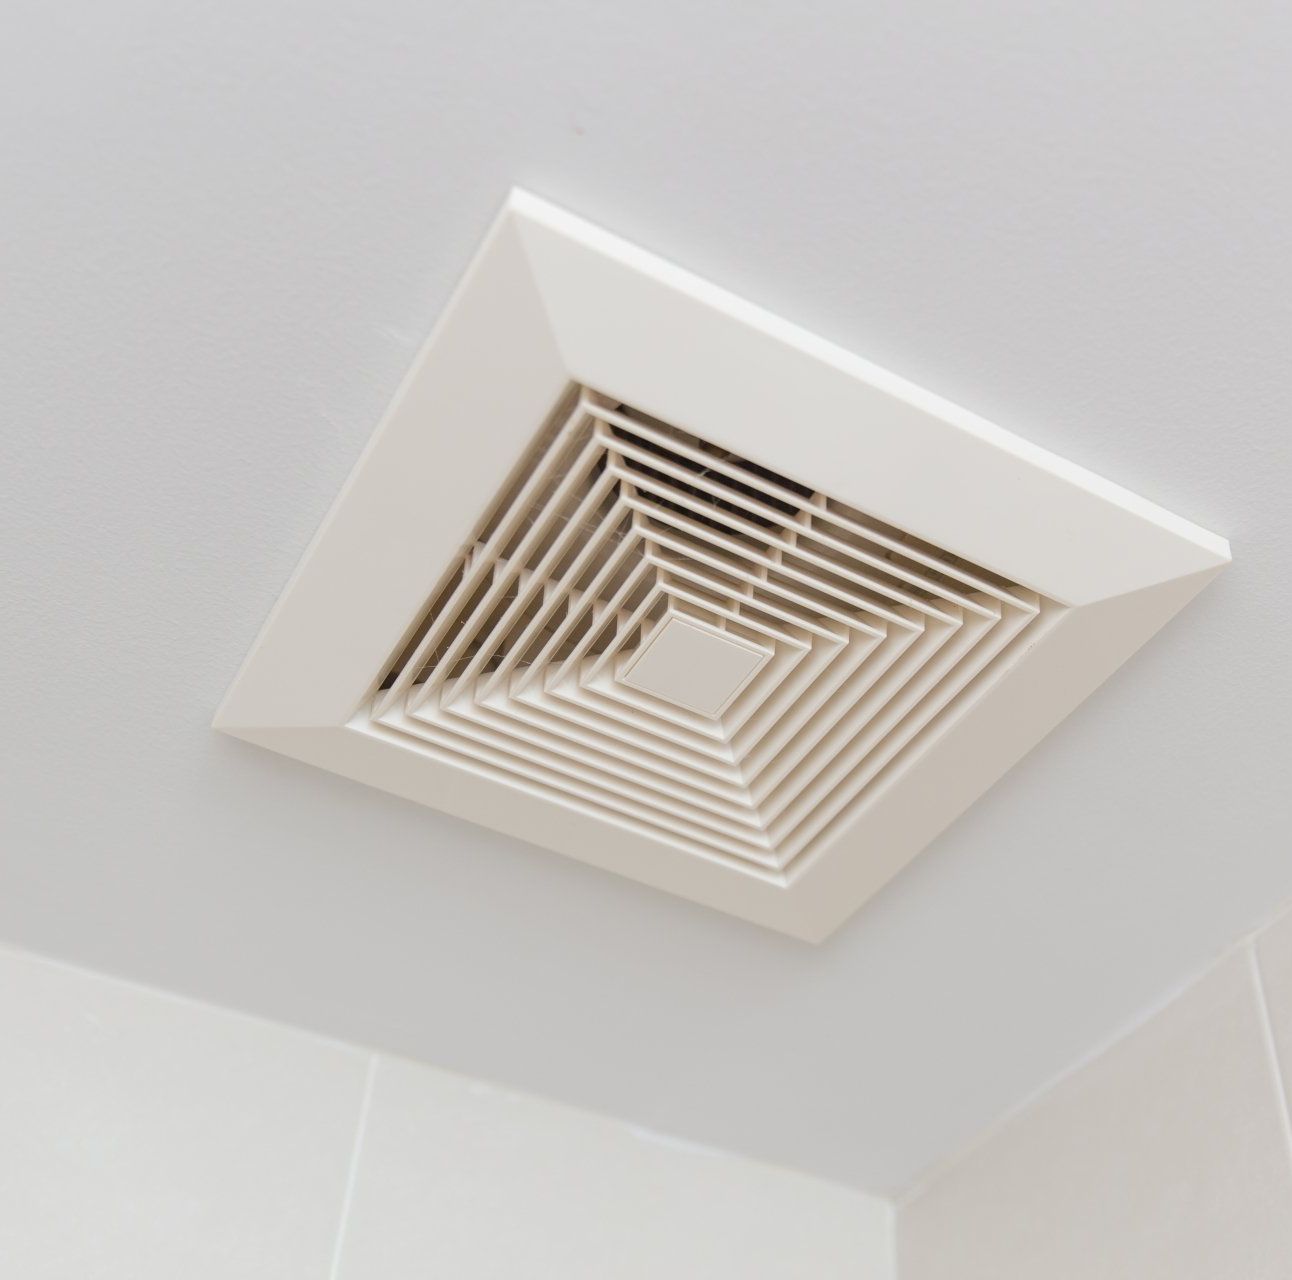 ventilation moisture duct in bathroom ceiling